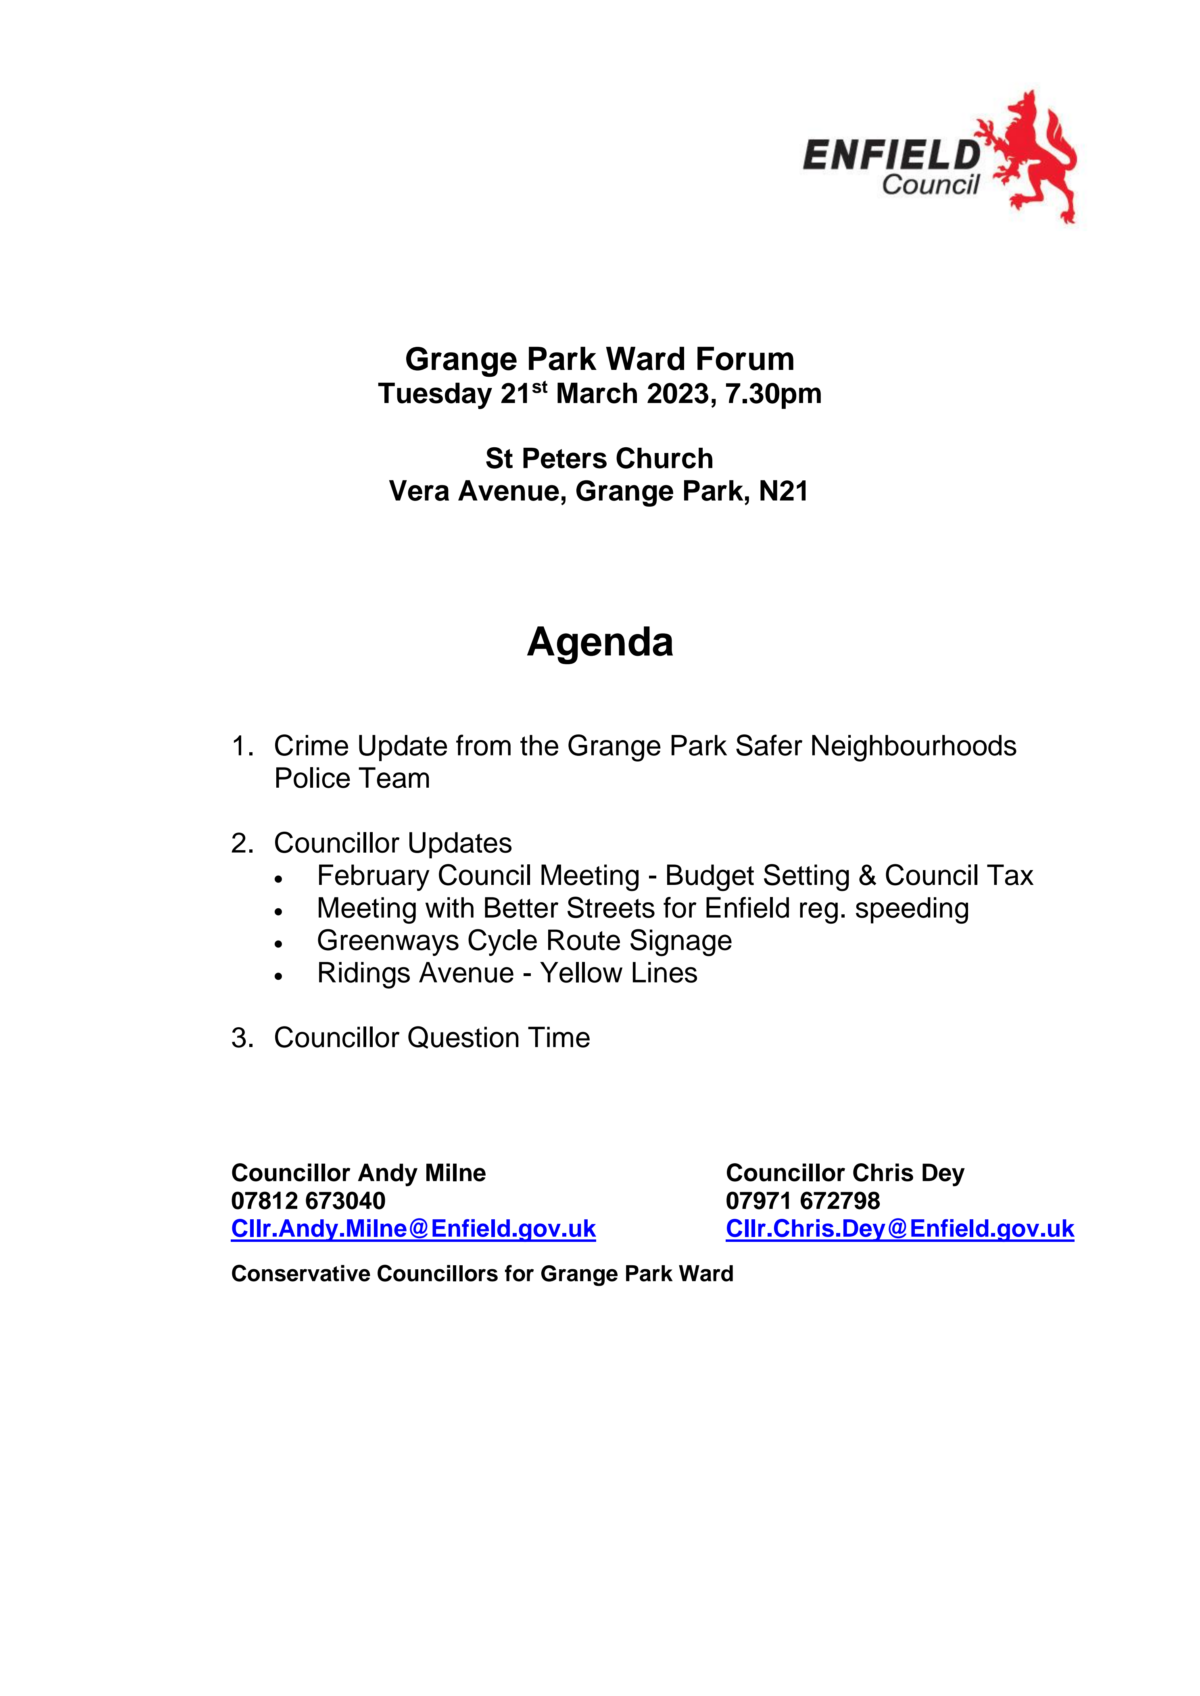 Grange Park Ward Forum, Tuesday 21 March 2023 @7.30pm St Peters Church, Vera Avenue